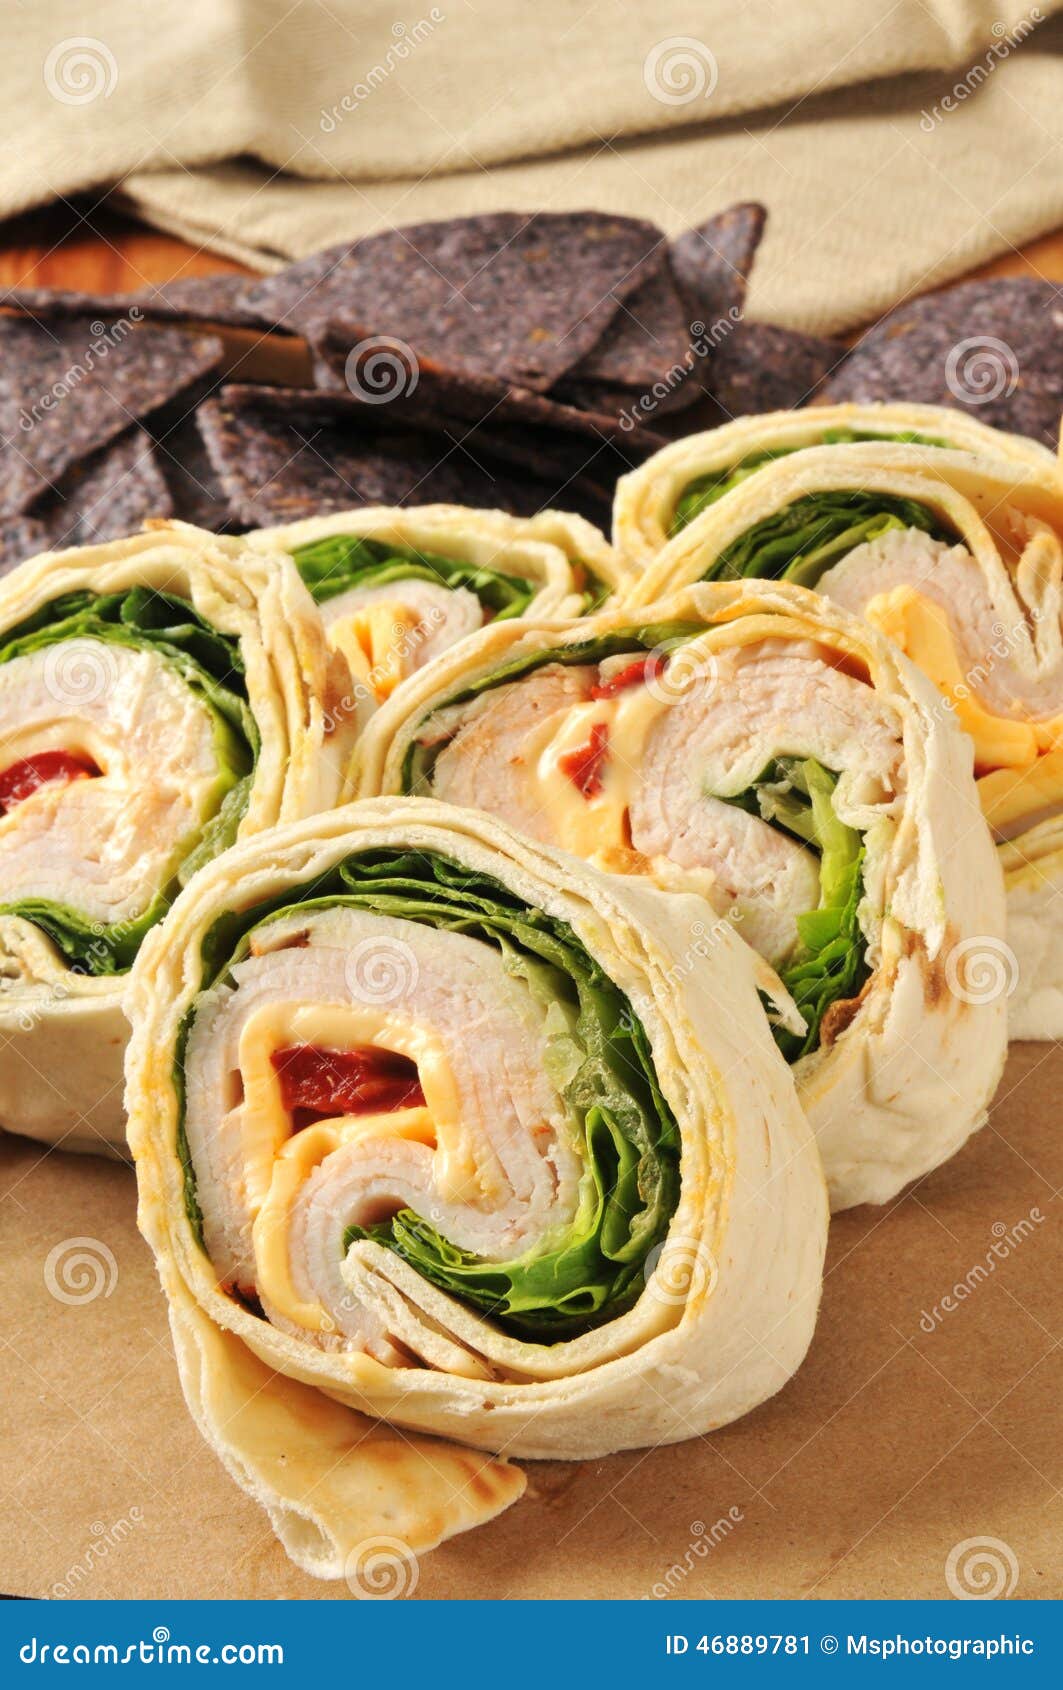 Chicken wrap sandwich stock image. Image of blue, lettuce - 46889781